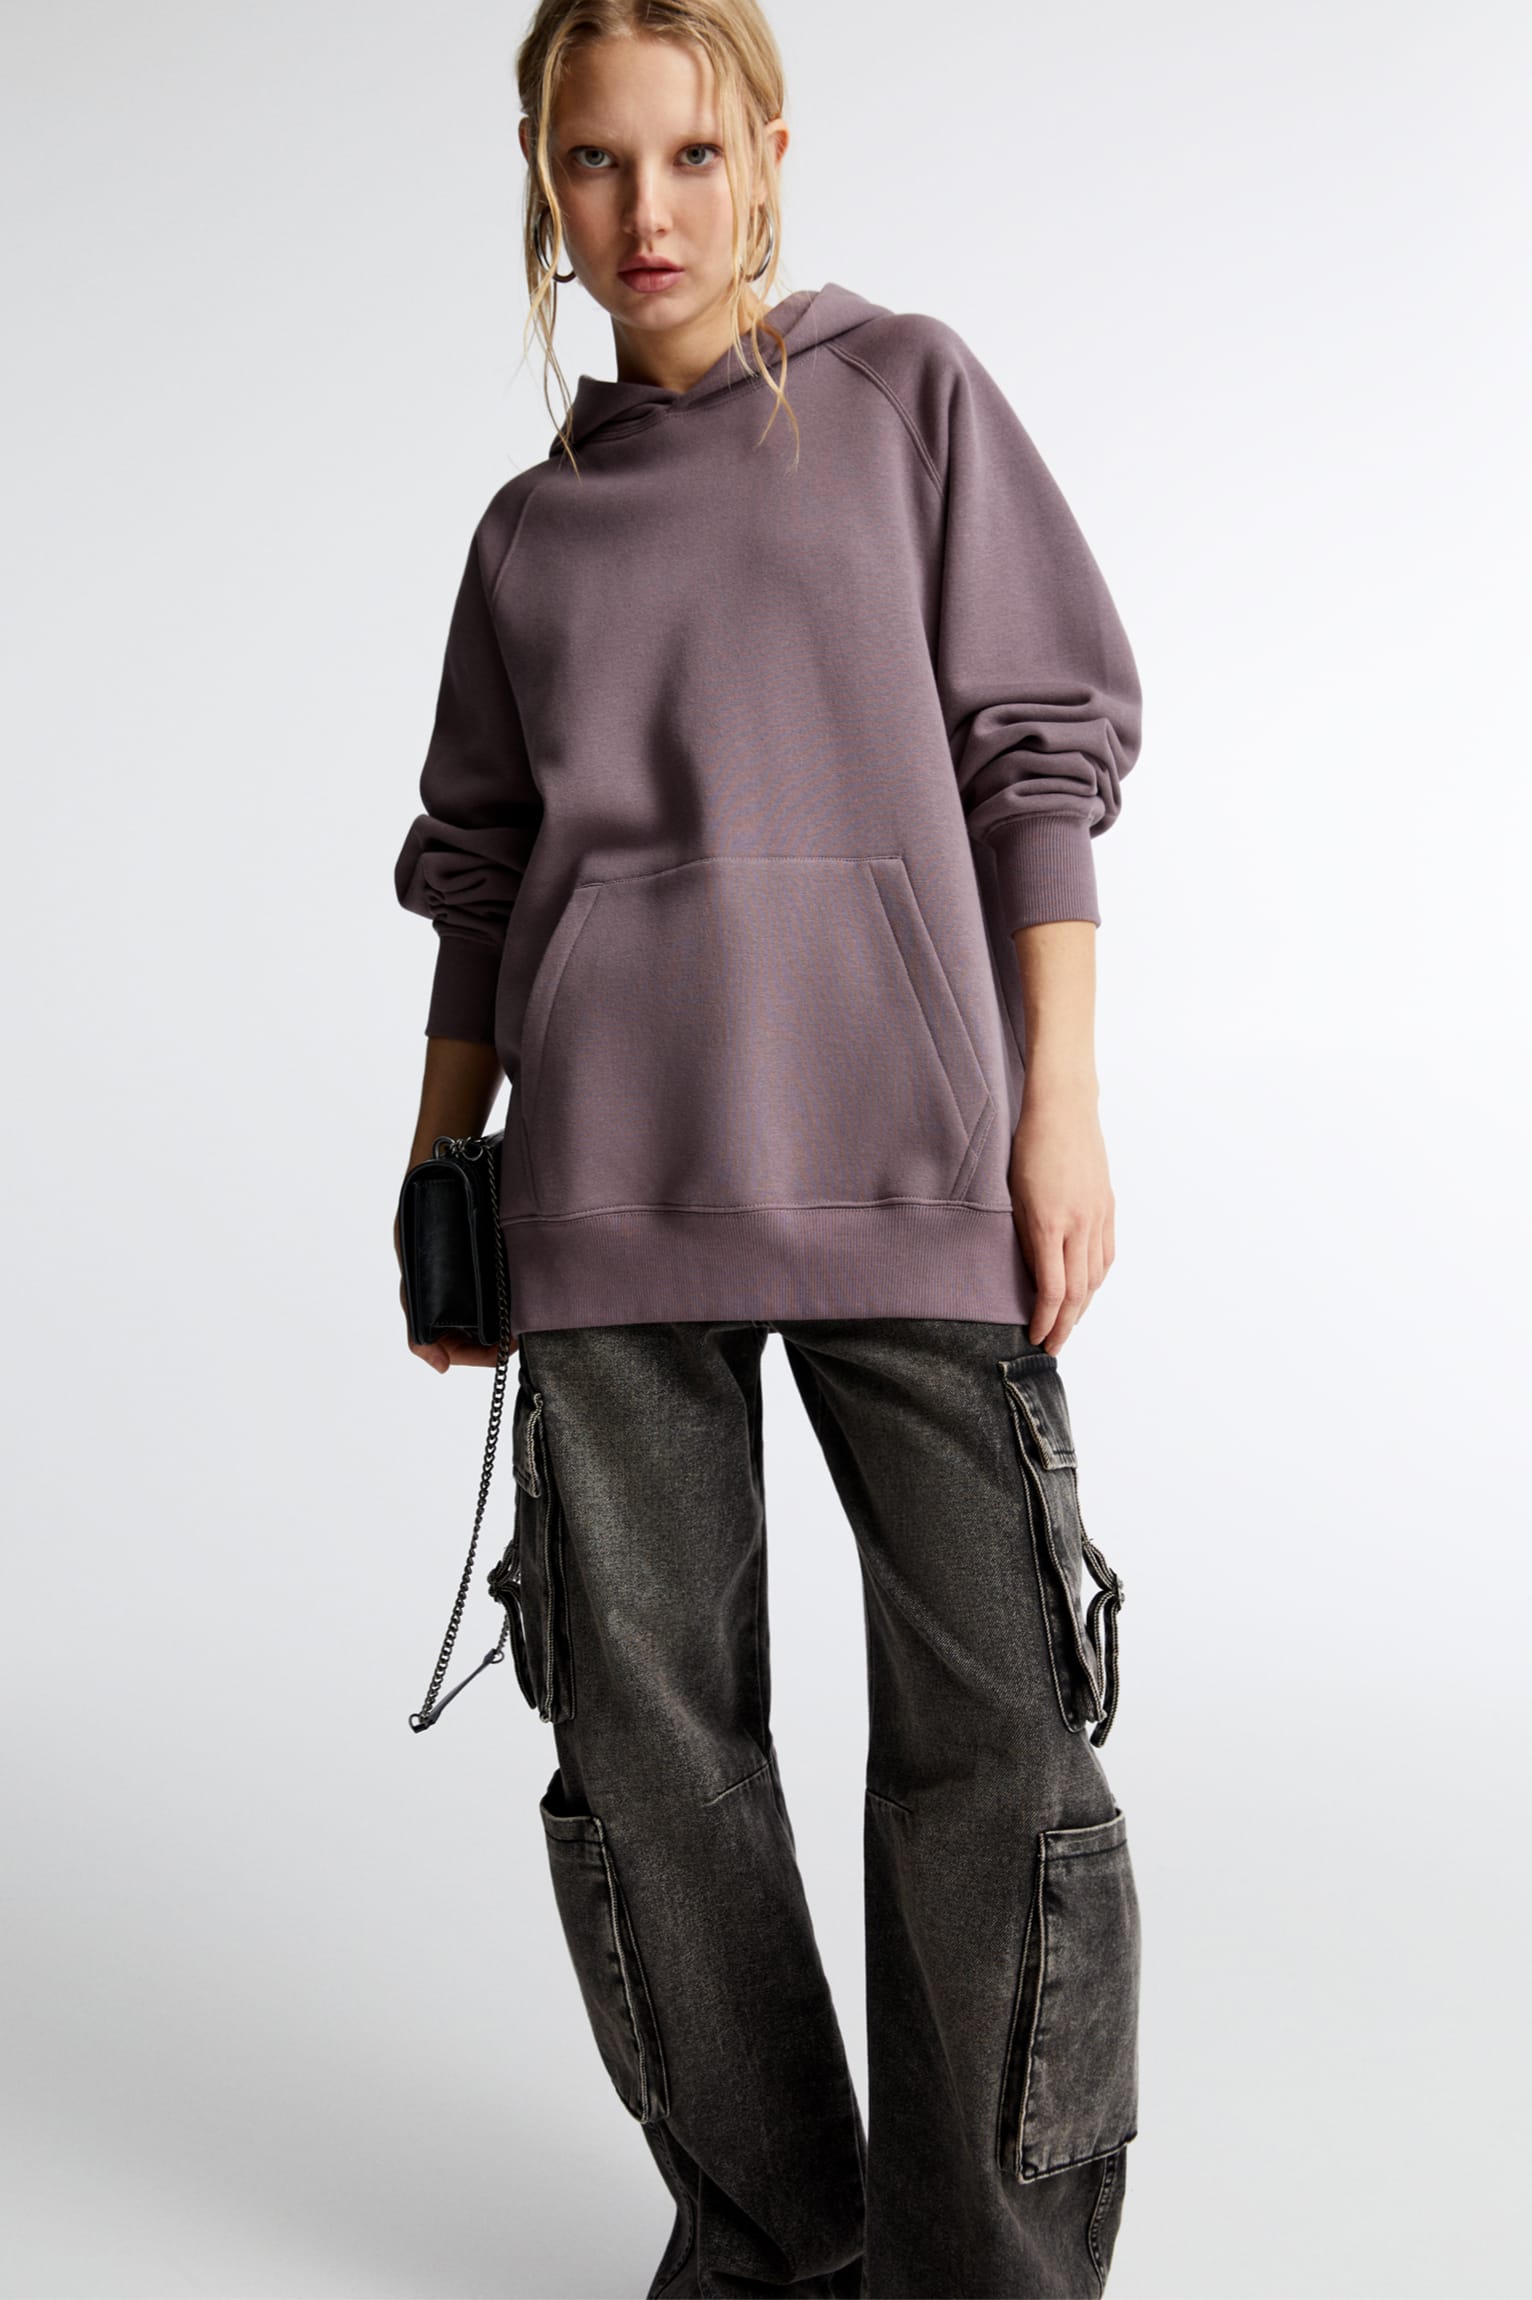 Basics - Sweatshirts & hoodies - Clothing - Woman - PULL&BEAR Bosnia And  Herzegovina